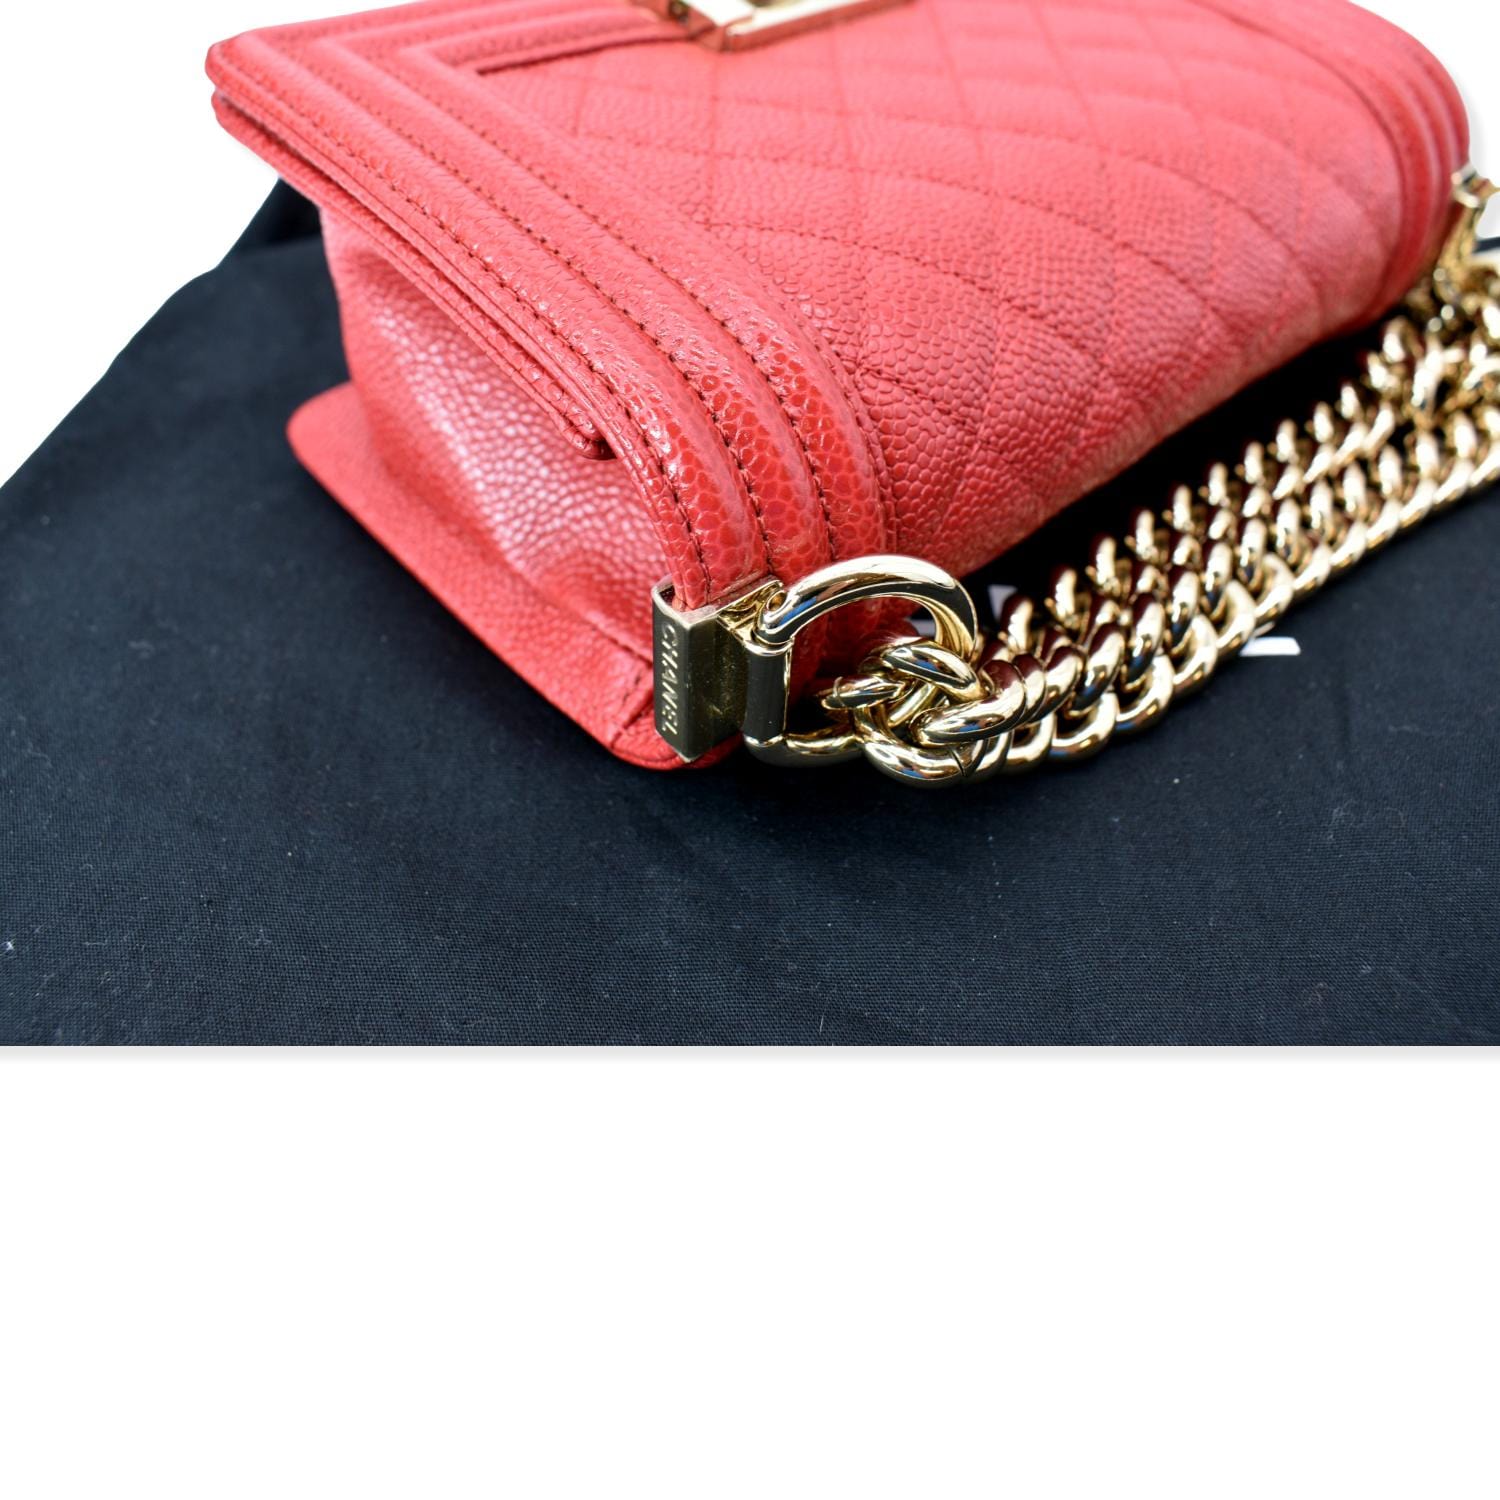 CHANEL, Bags, Pink Chanel Le Boy Caviar Medium Bag